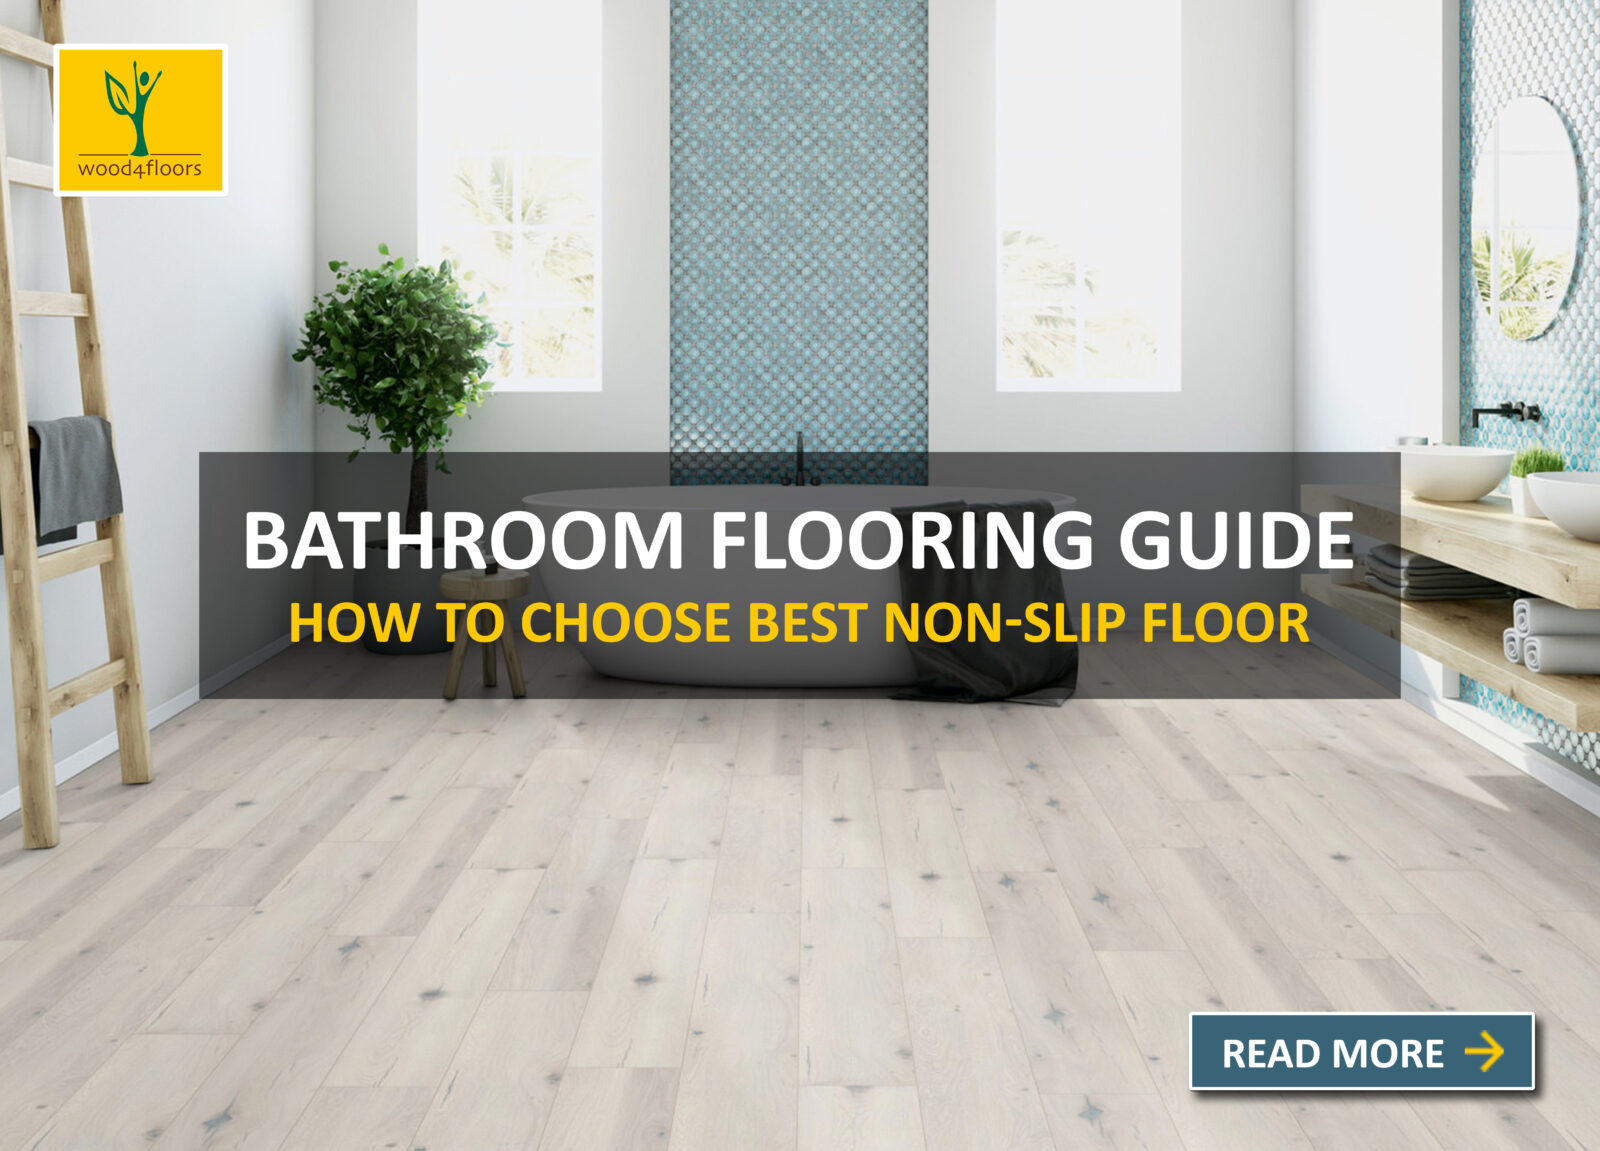 How To Choose The Best Non-Slip Bathroom Floor Materials